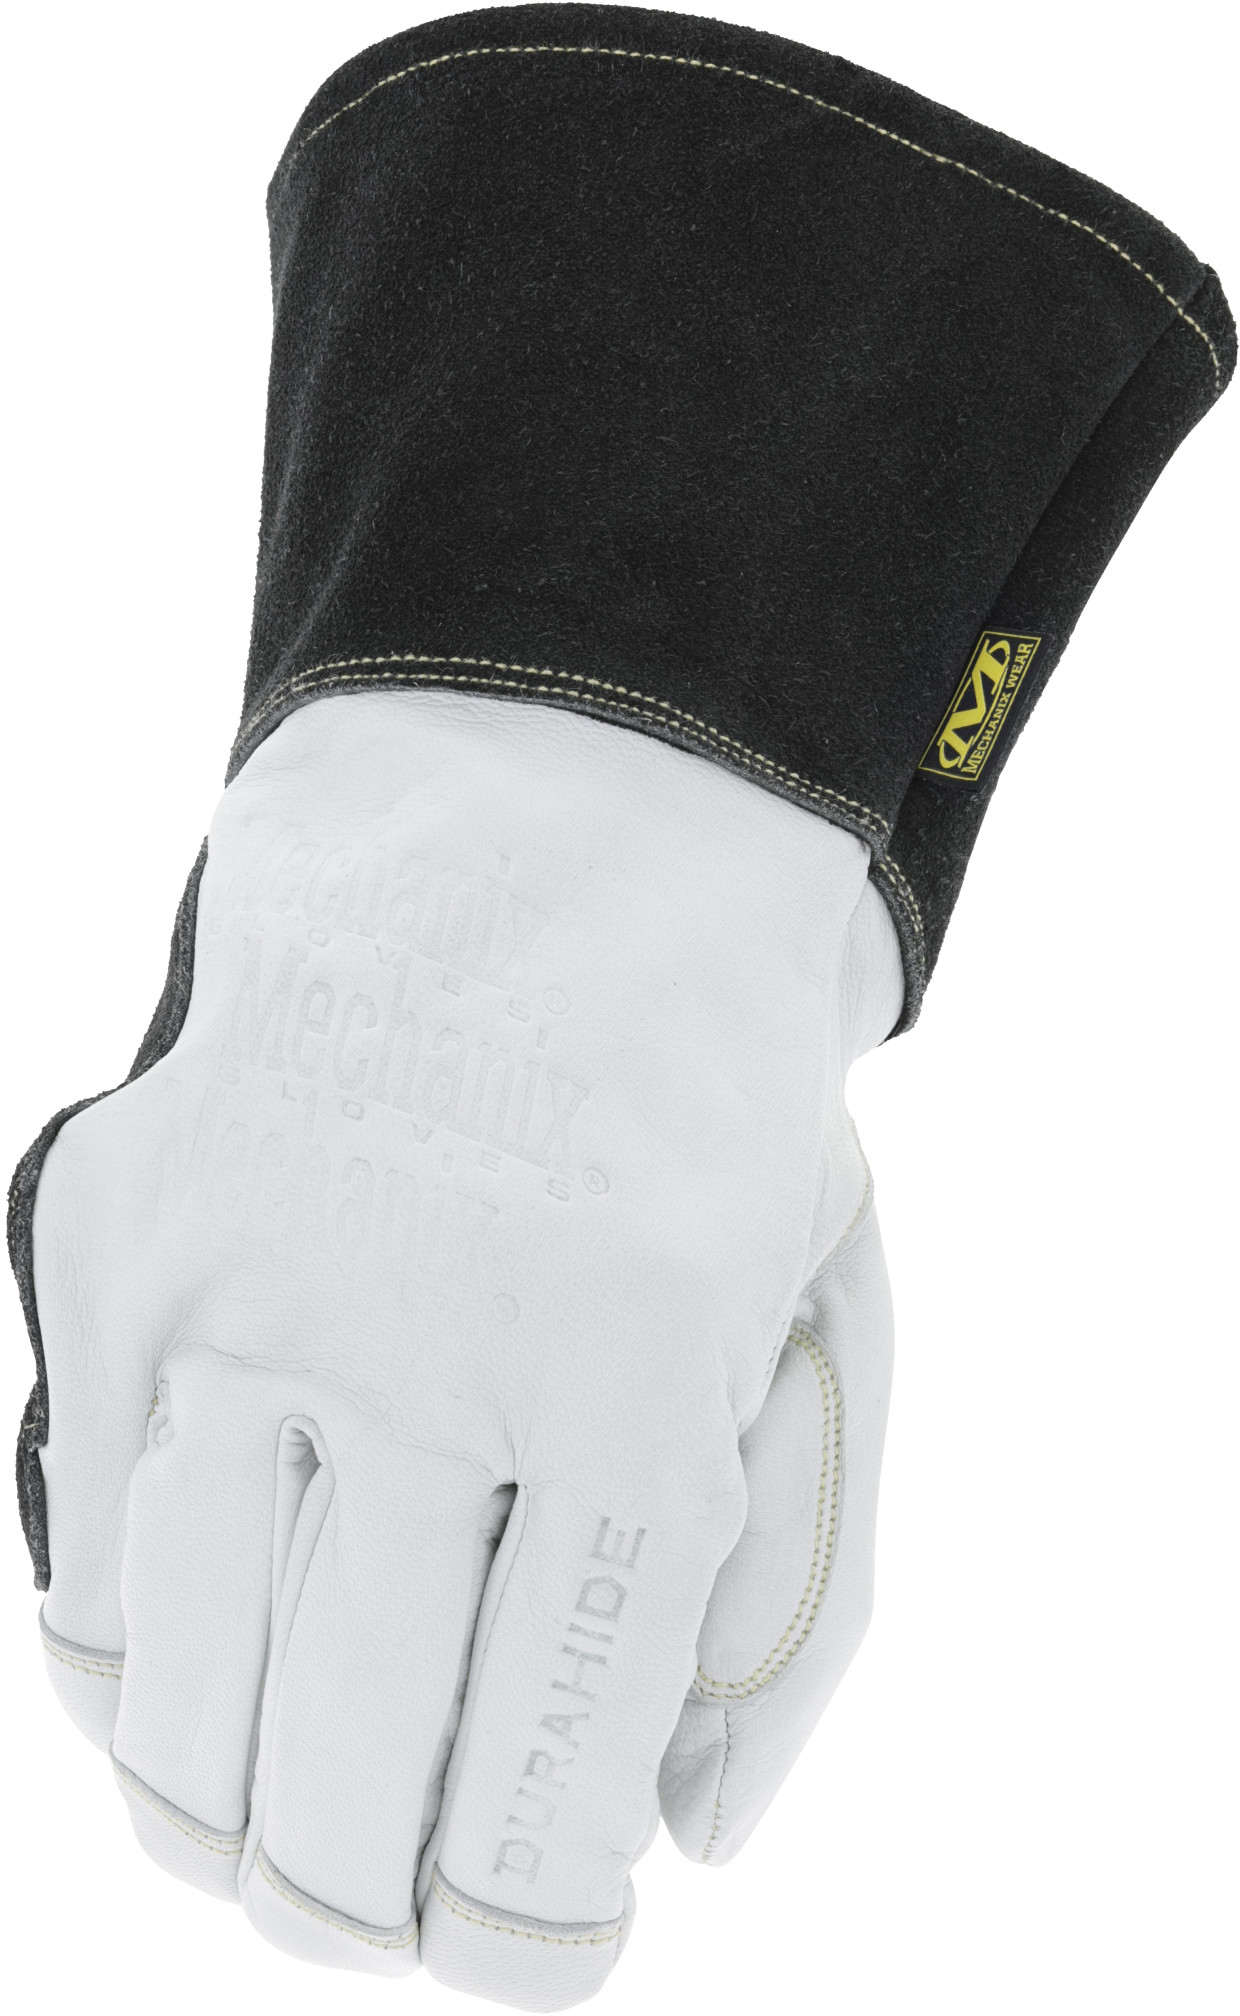 Mechanix Wear DURAHIDE M-PACT LDMP-C75 Heat Resistant Gloves